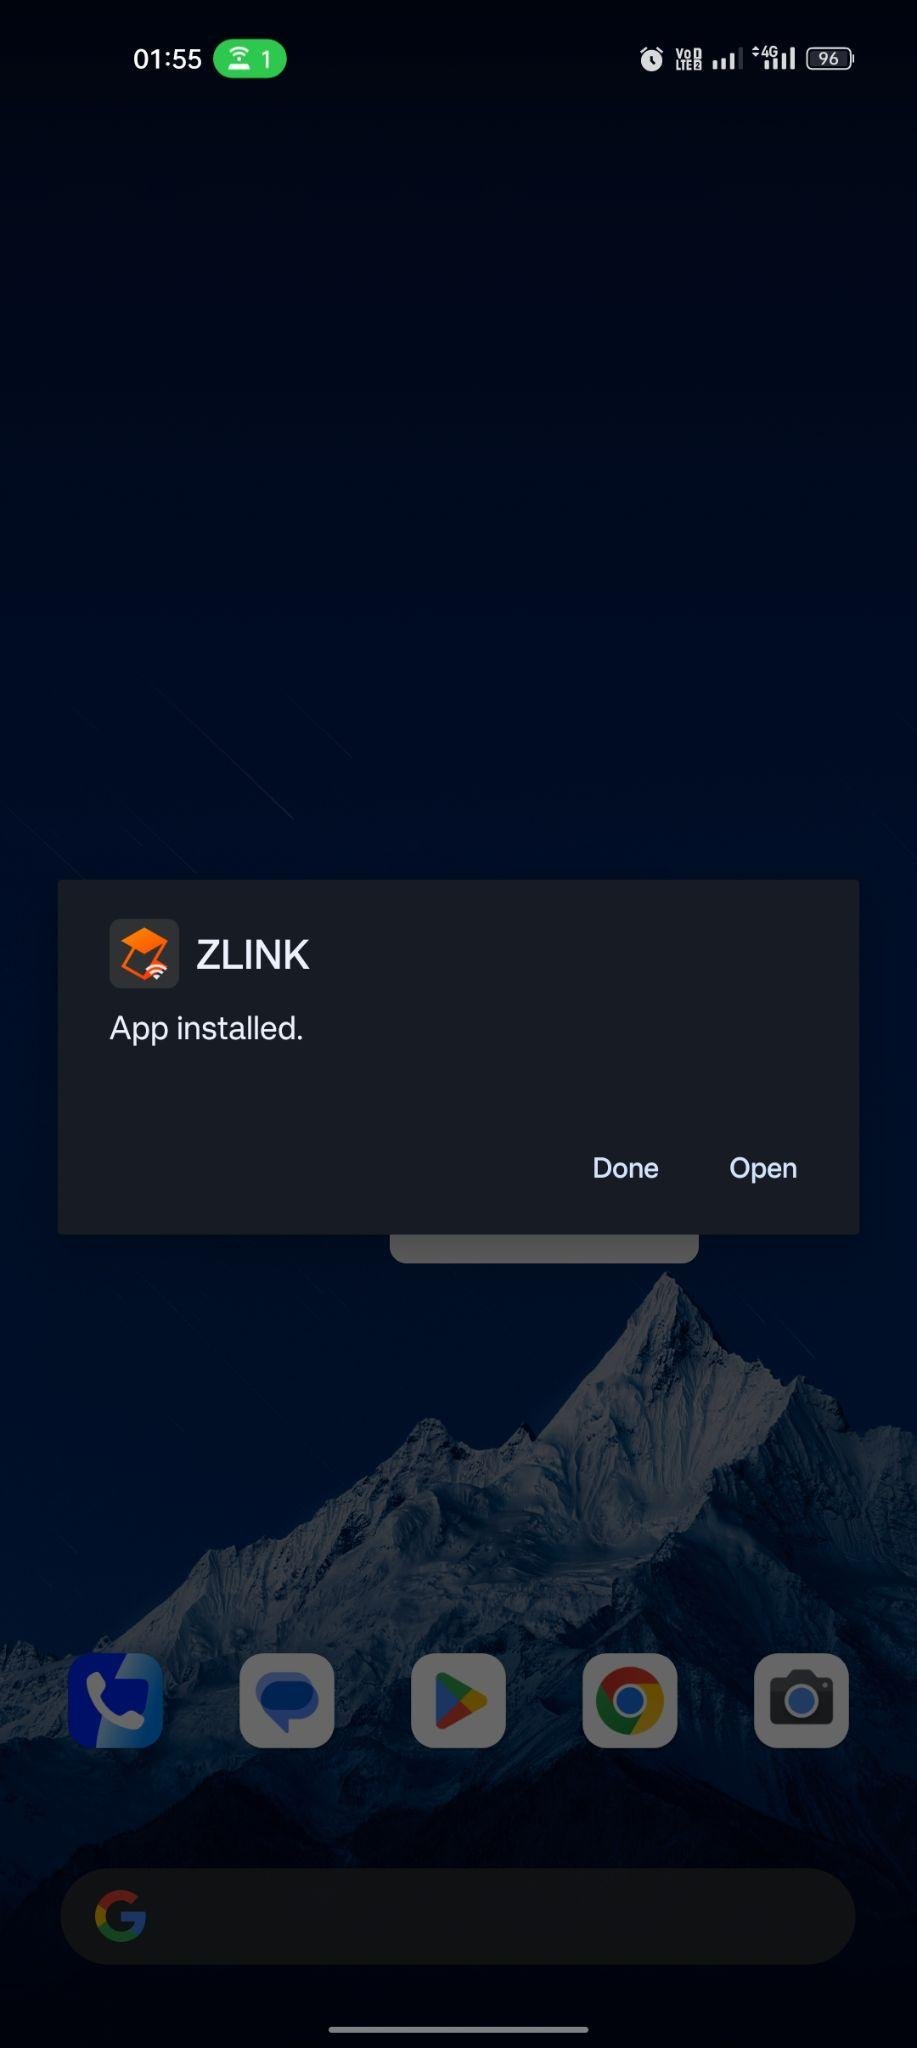 ZLINK apk installed